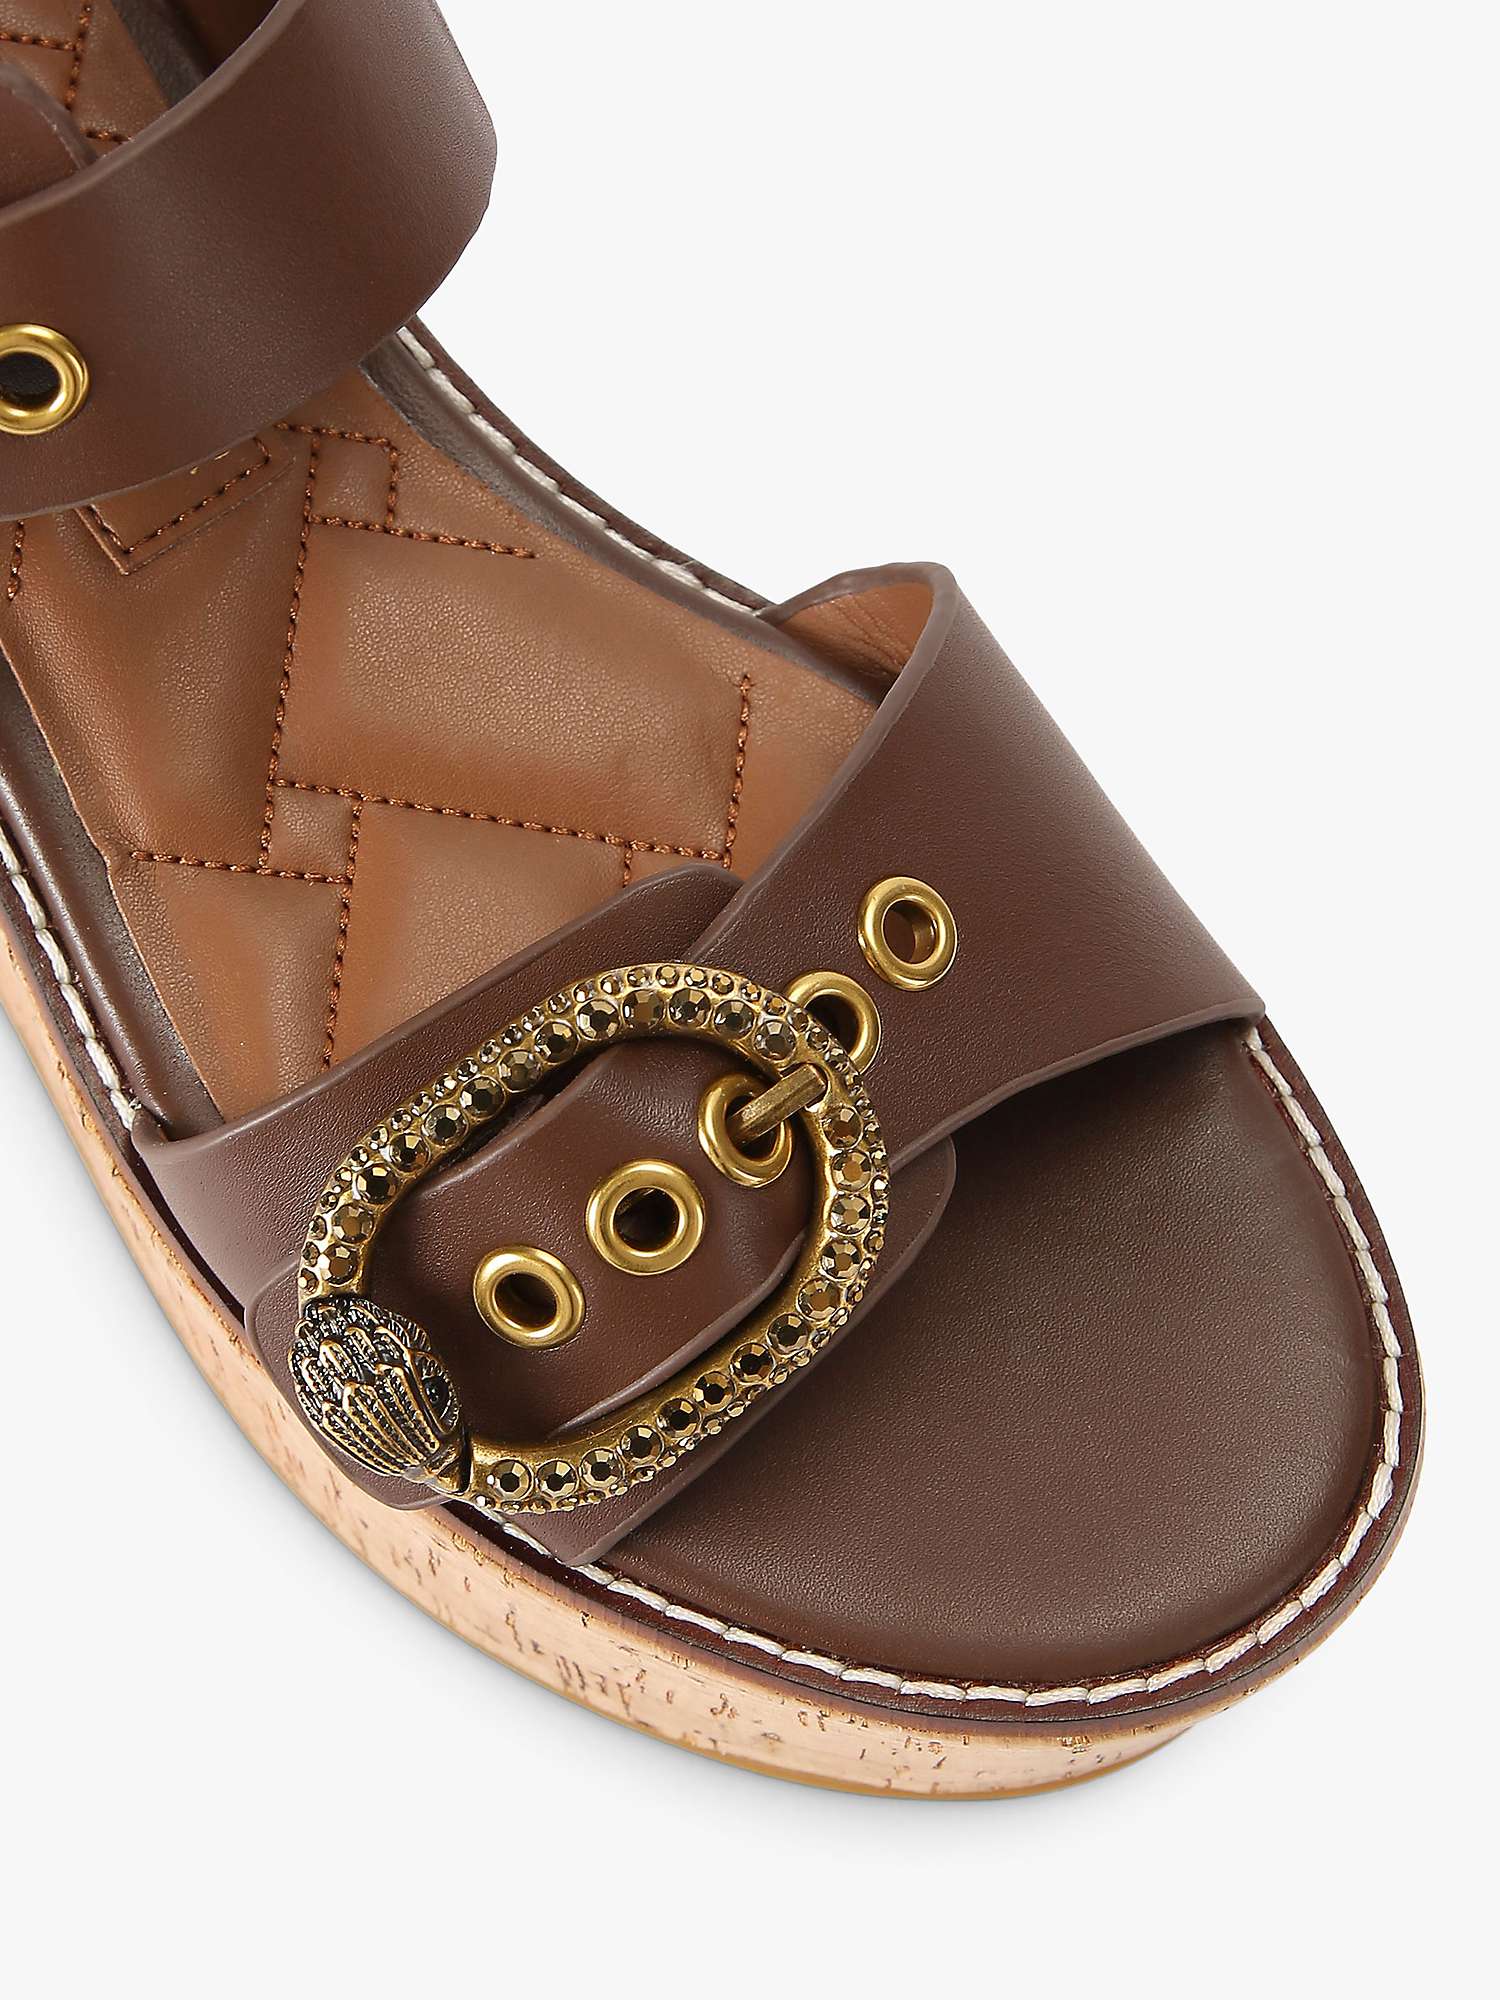 Buy Kurt Geiger London Mayfair Leather Flatform Sandals, Brown Tan Online at johnlewis.com